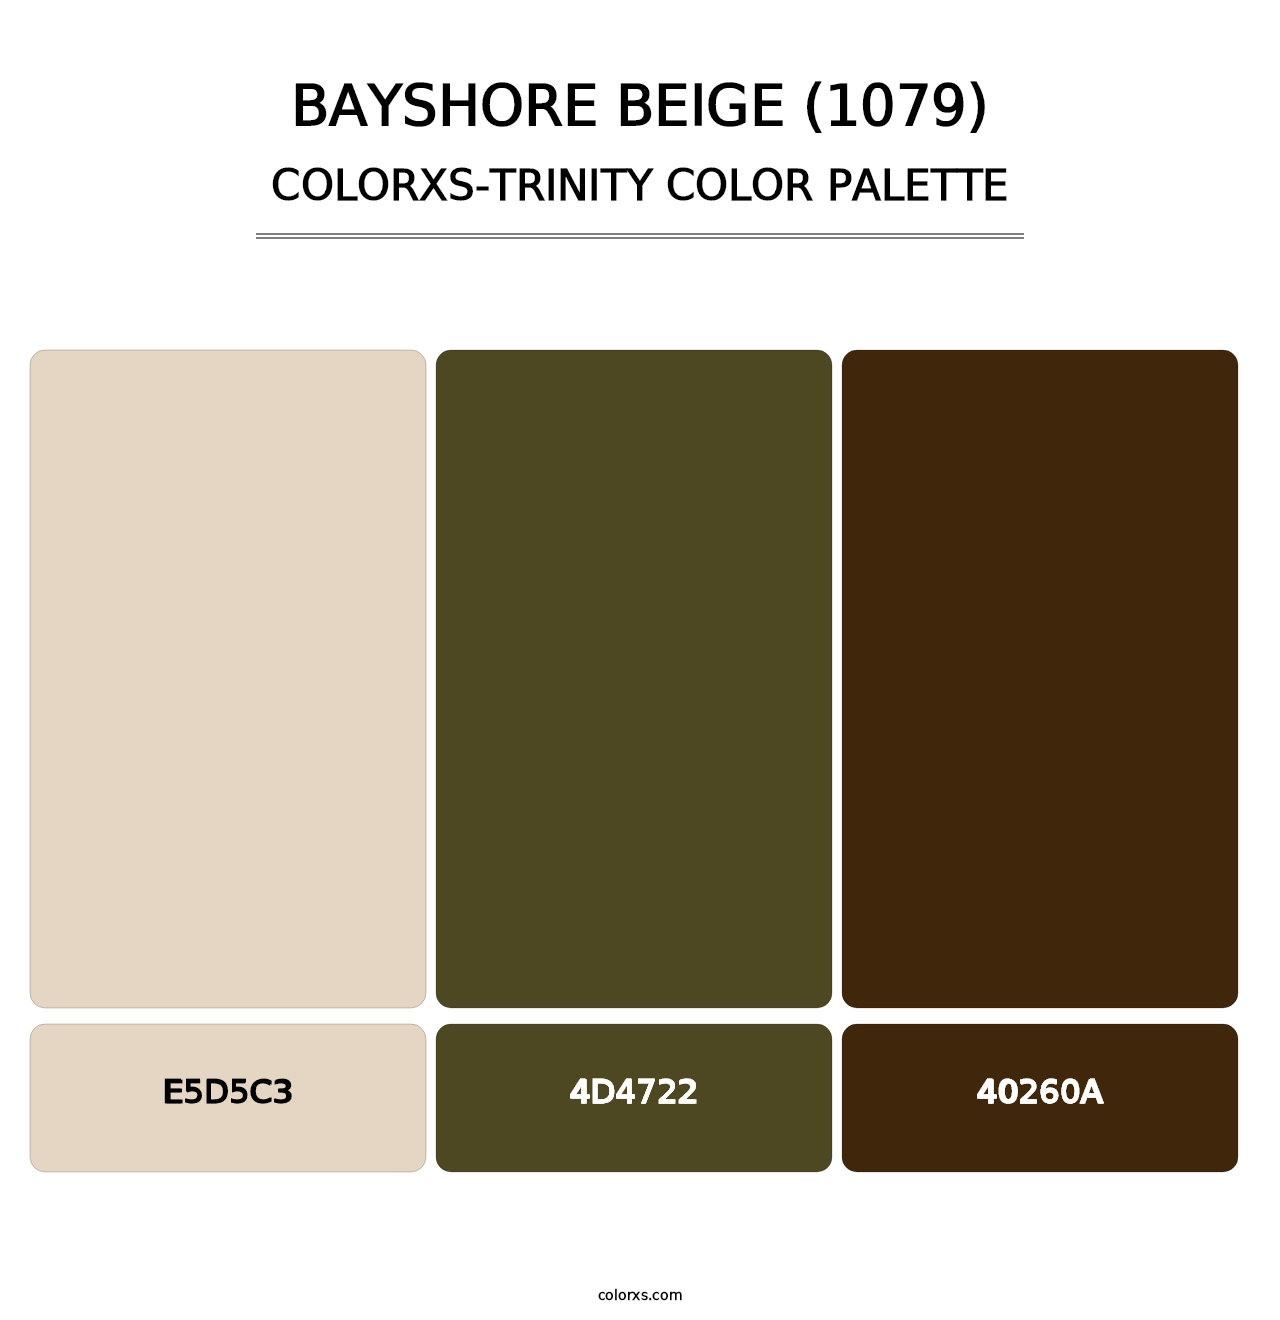 Bayshore Beige (1079) - Colorxs Trinity Palette